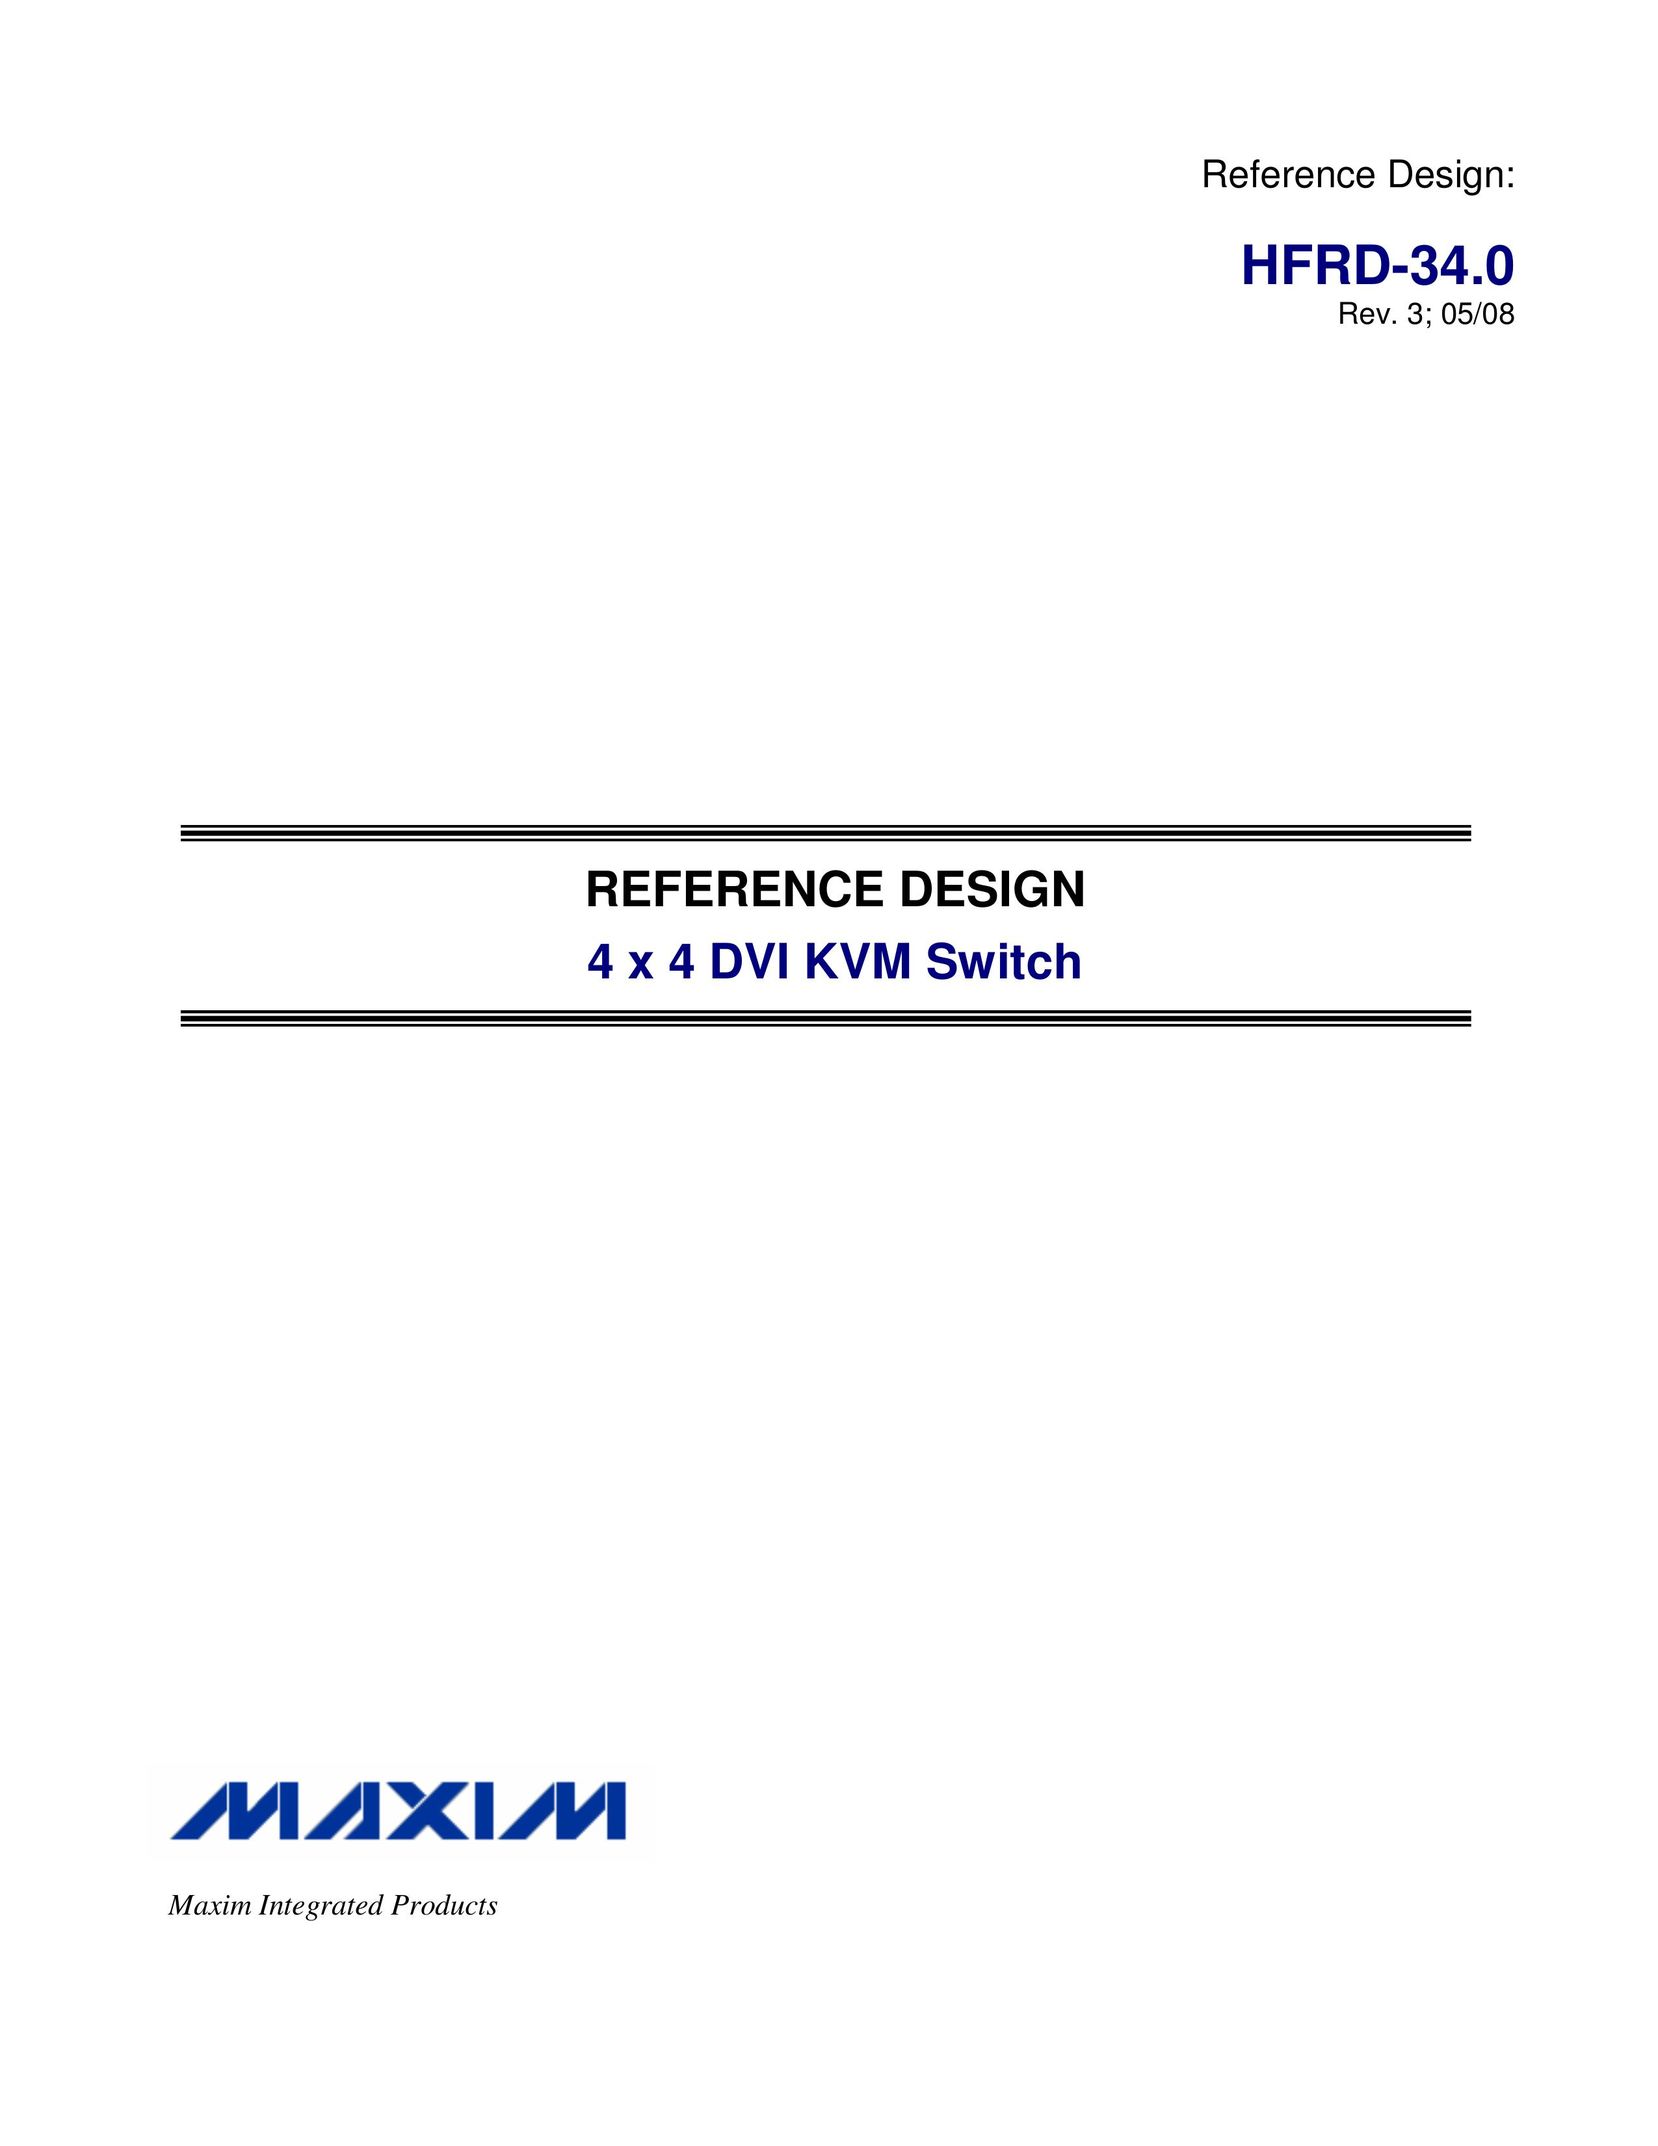 Maxim HFRD-34.0 Switch User Manual